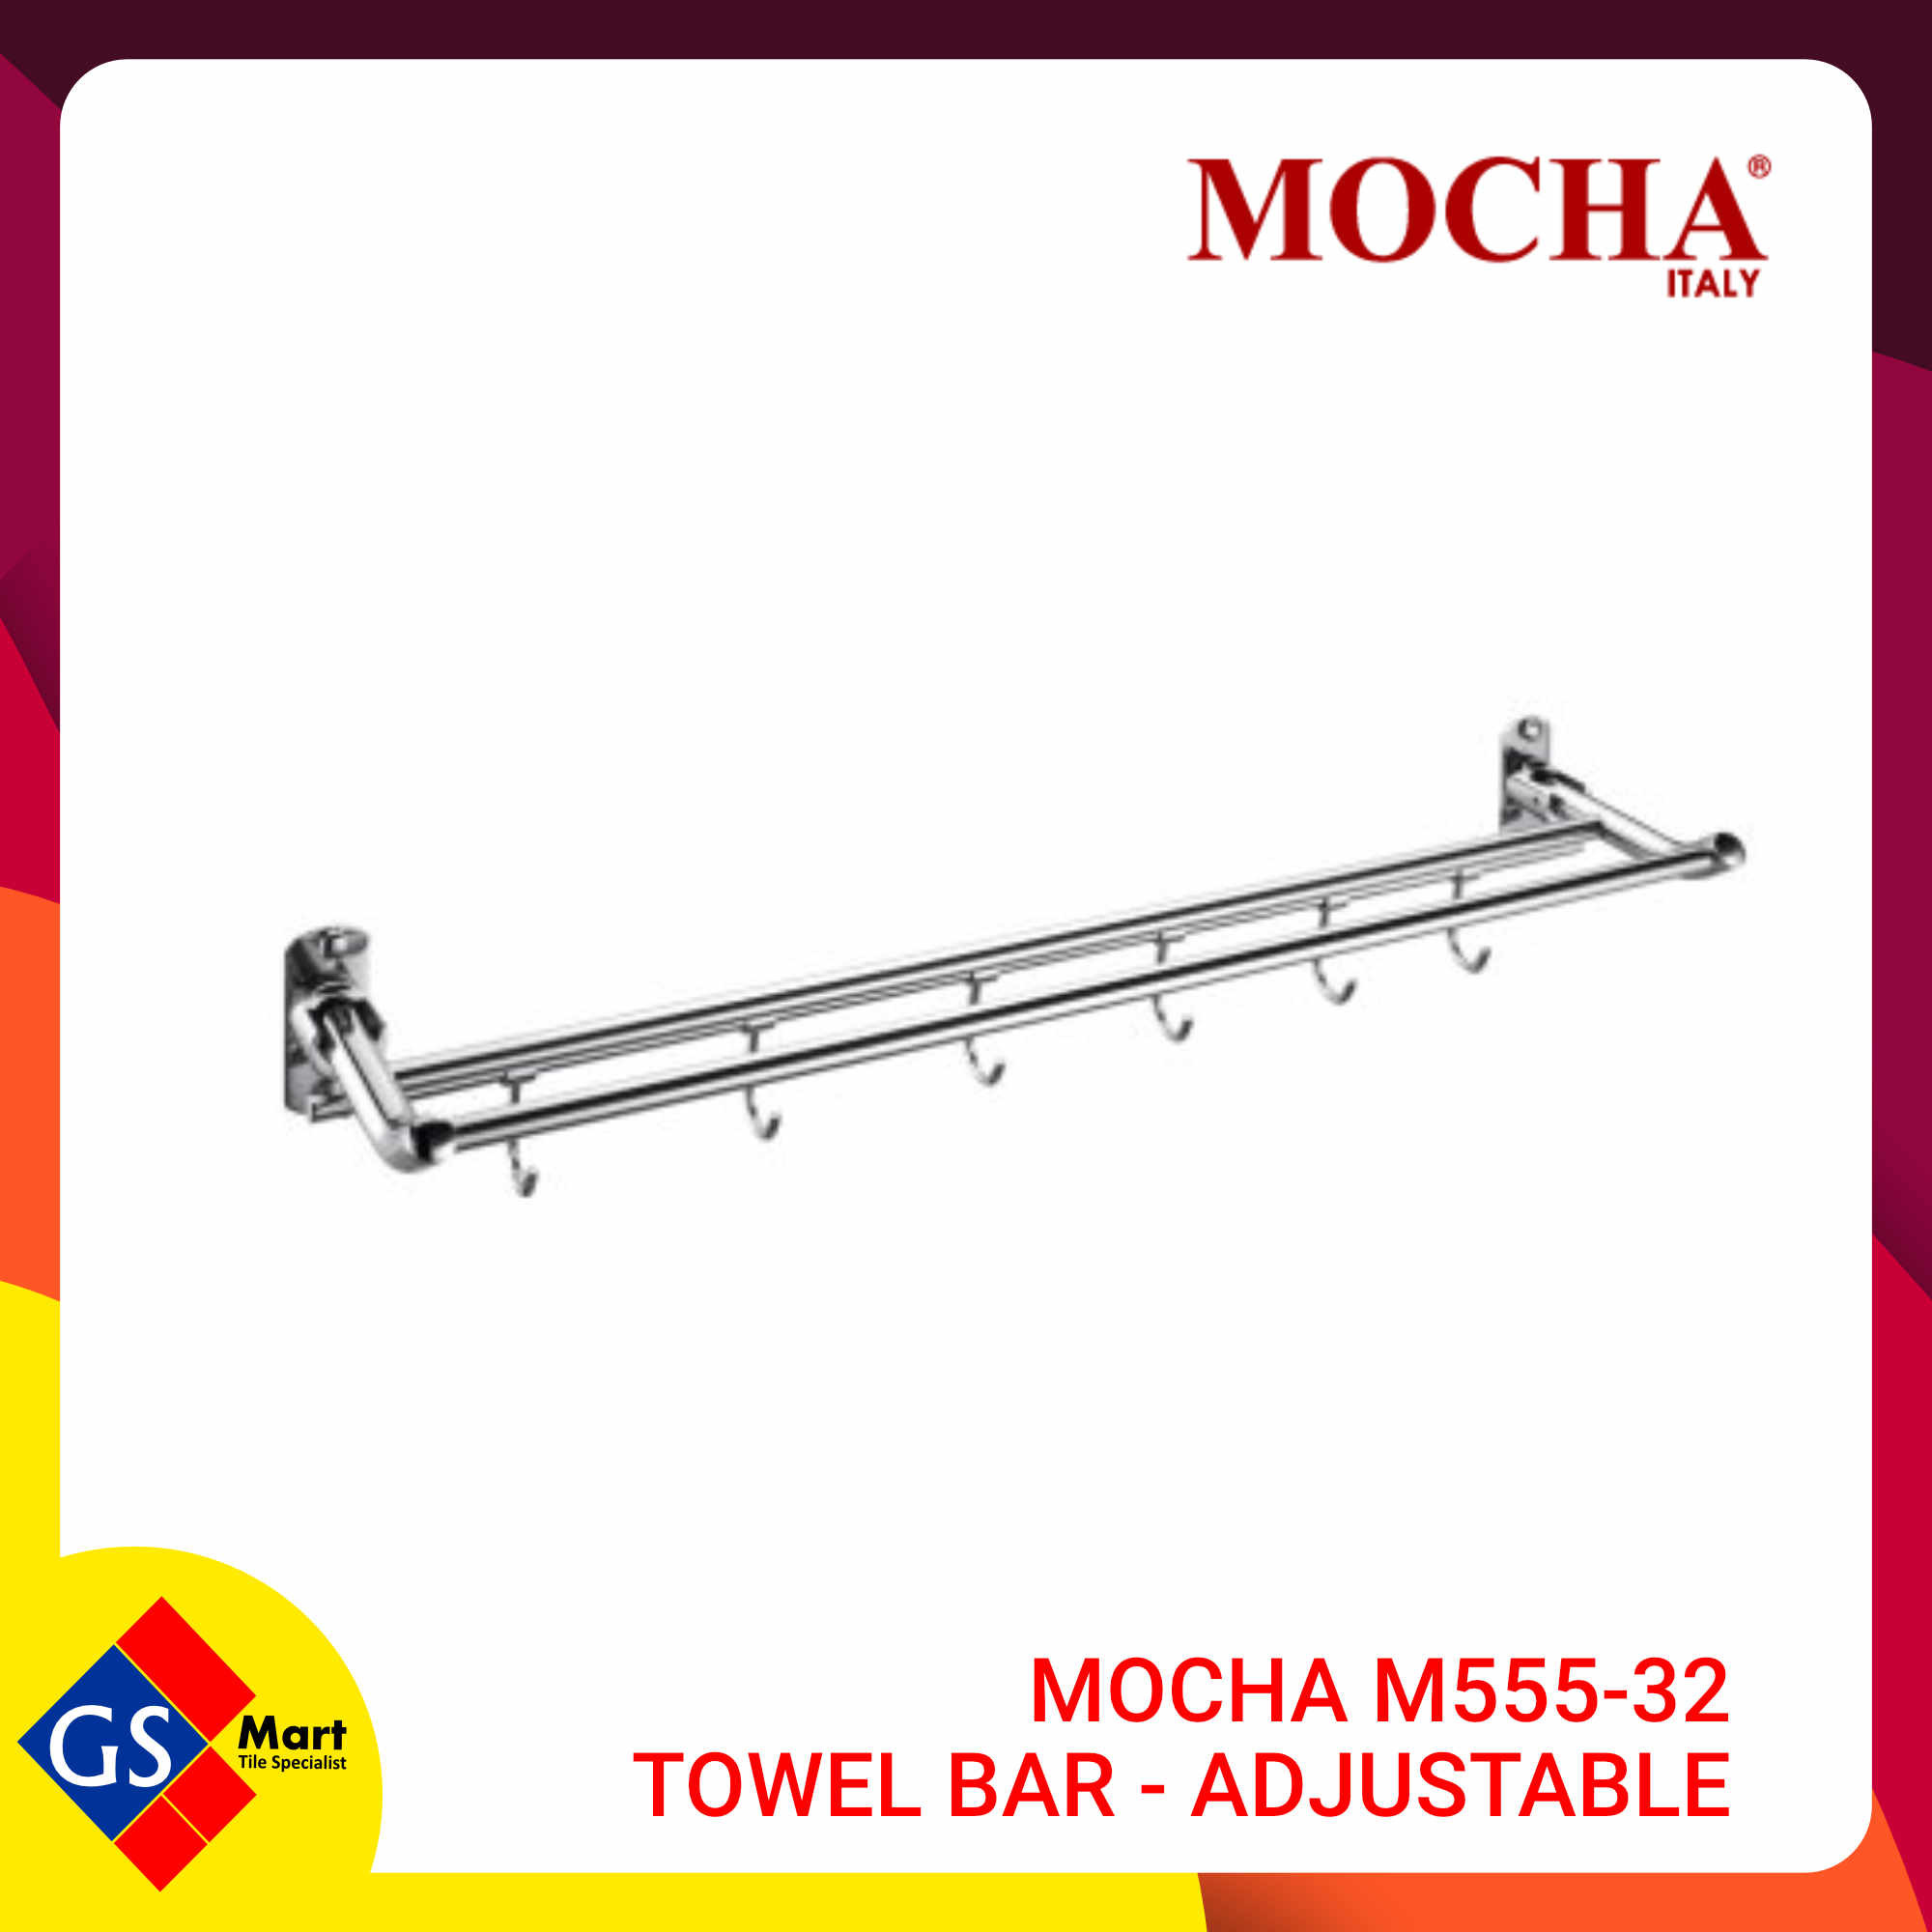 MOCHA M555-32 TOWEL BAR - Adjustable